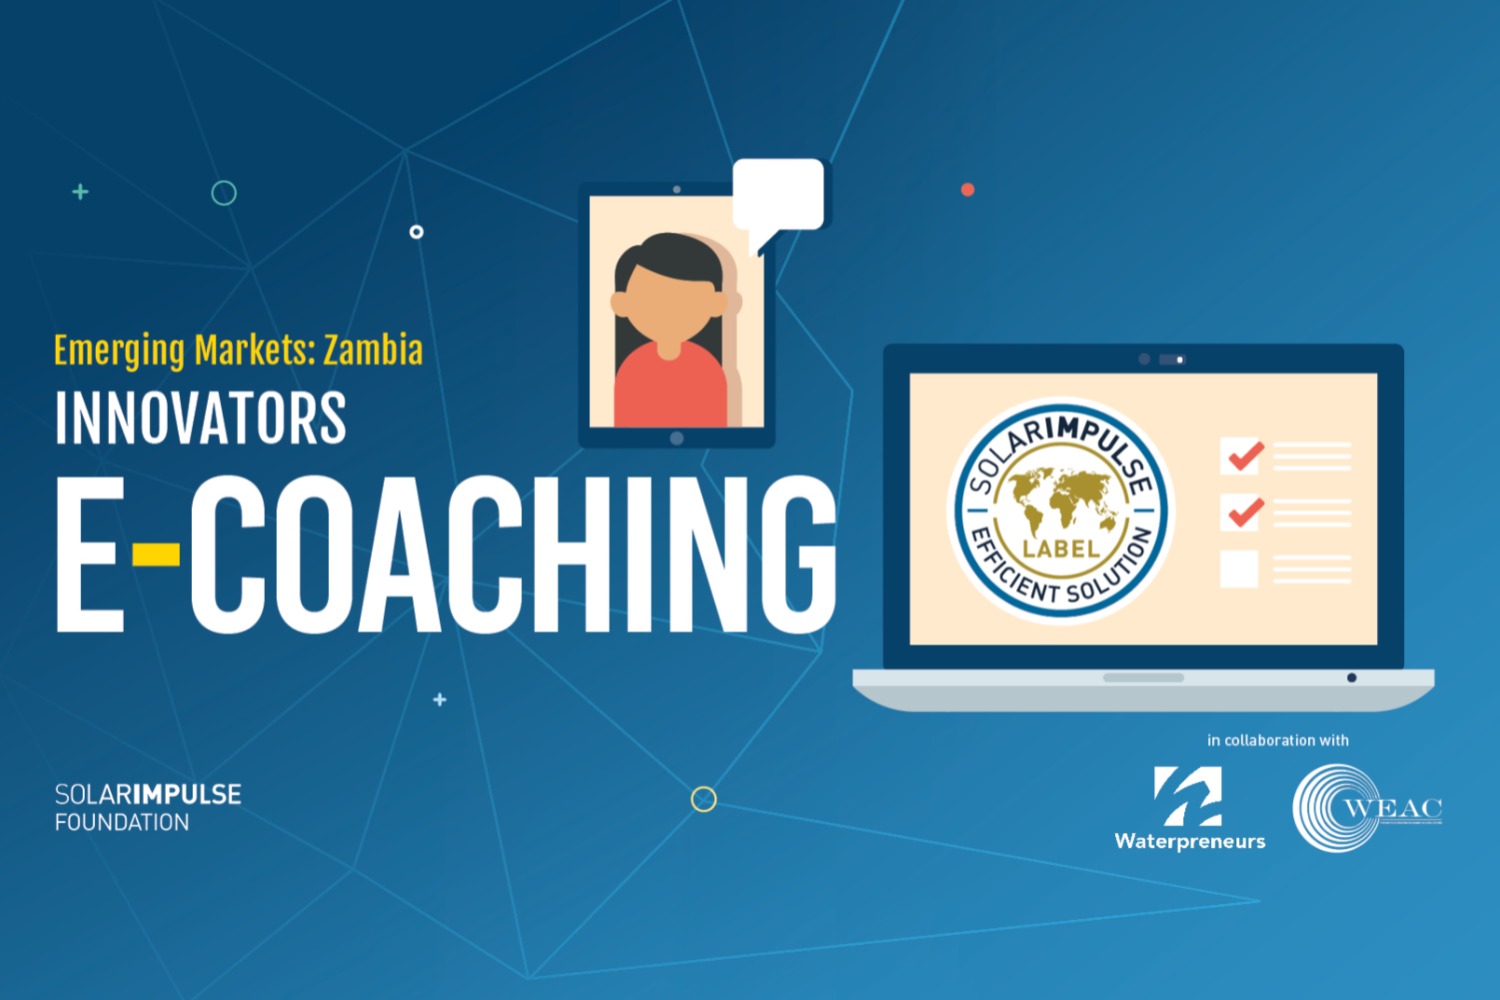 E-coaching - "Innovators in Emerging markets"